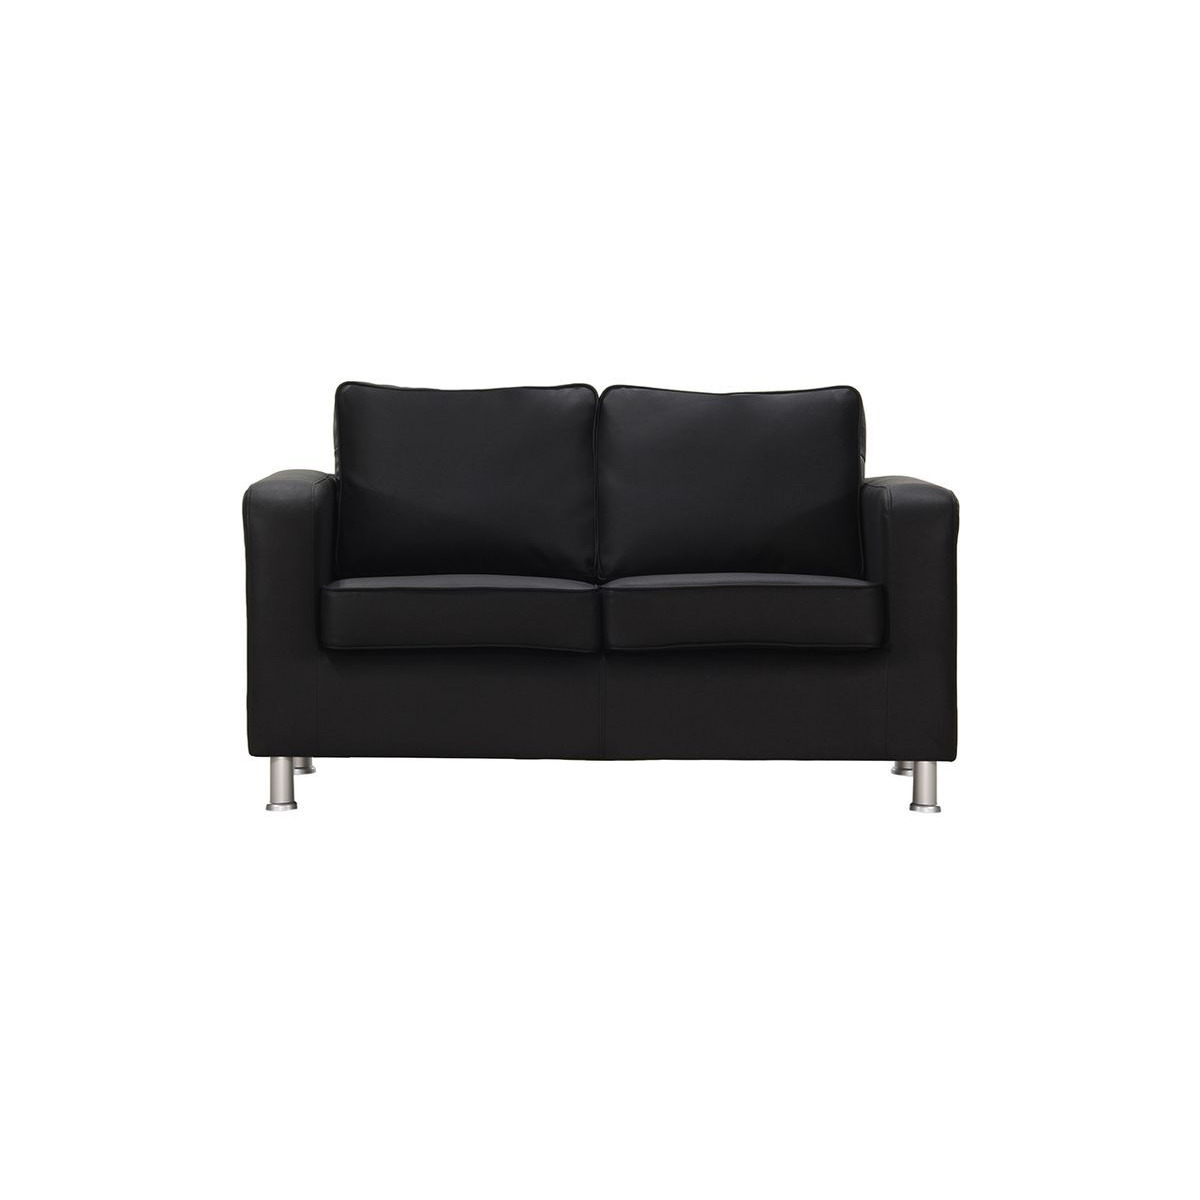 London 2 Seater Sofa, black - image 1